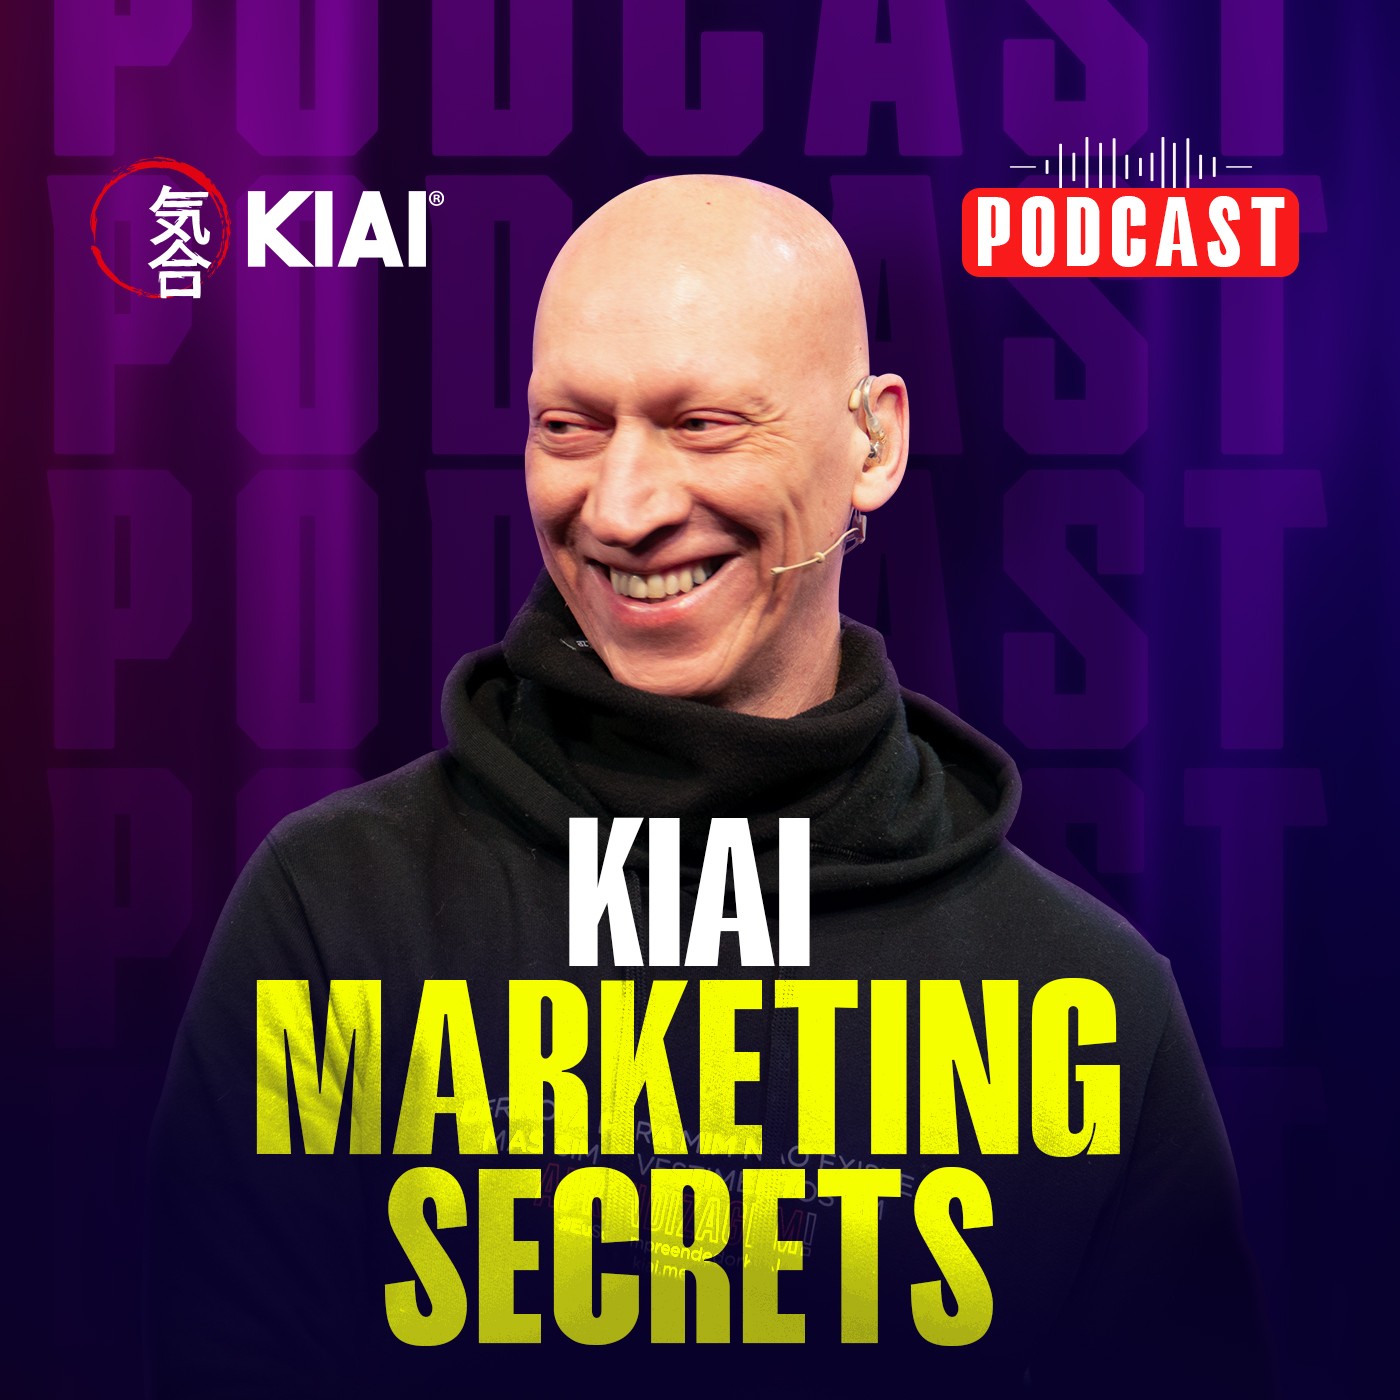 The KIAI Marketing Secrets’s Podcast